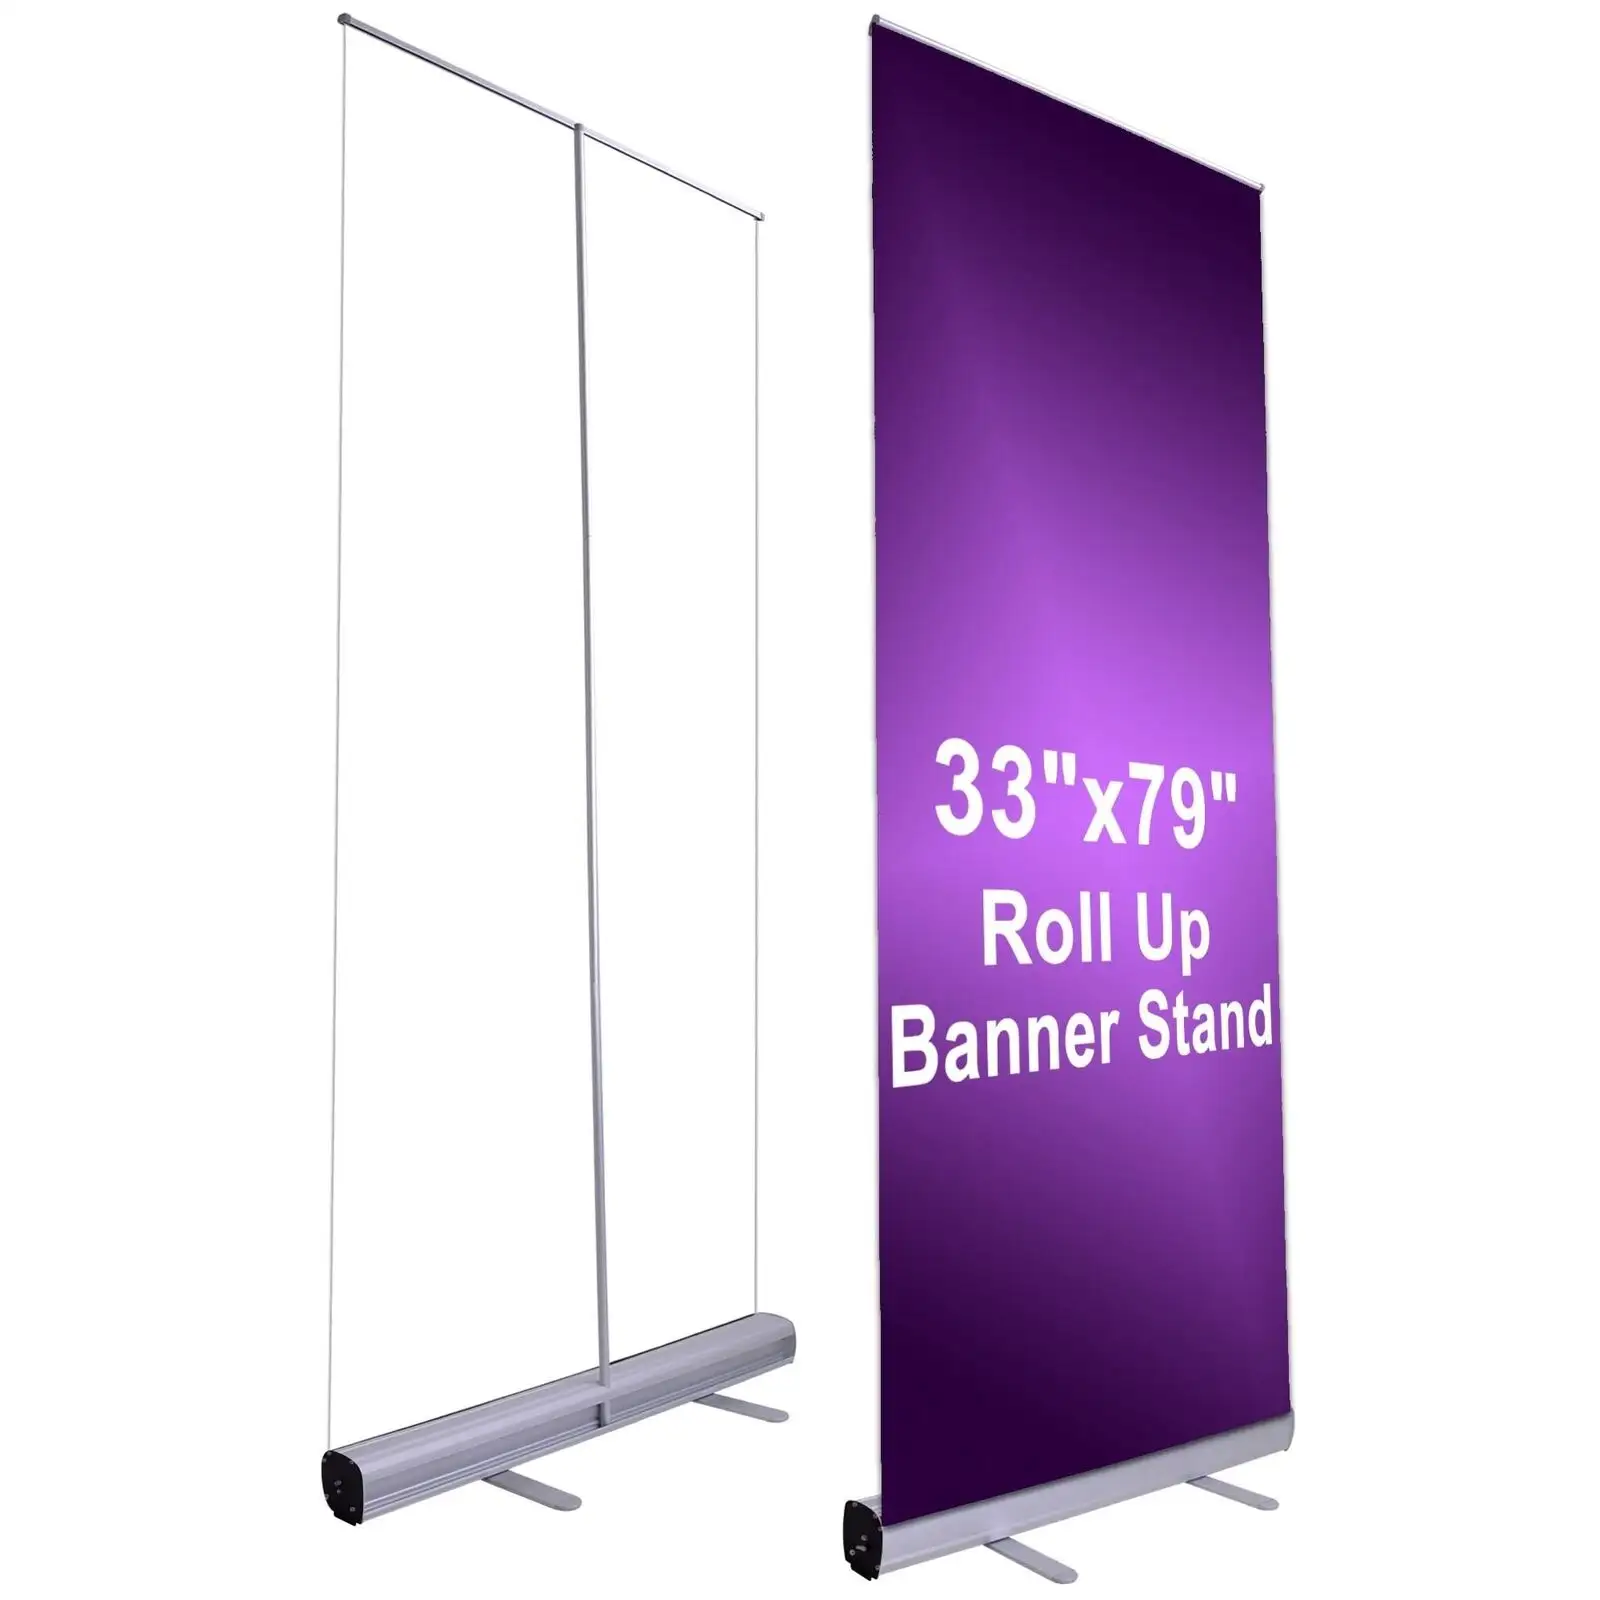 Taşınabilir reklam ekranı Stand Stand Stand Up promosyon olay fuar Rollup Banner standı